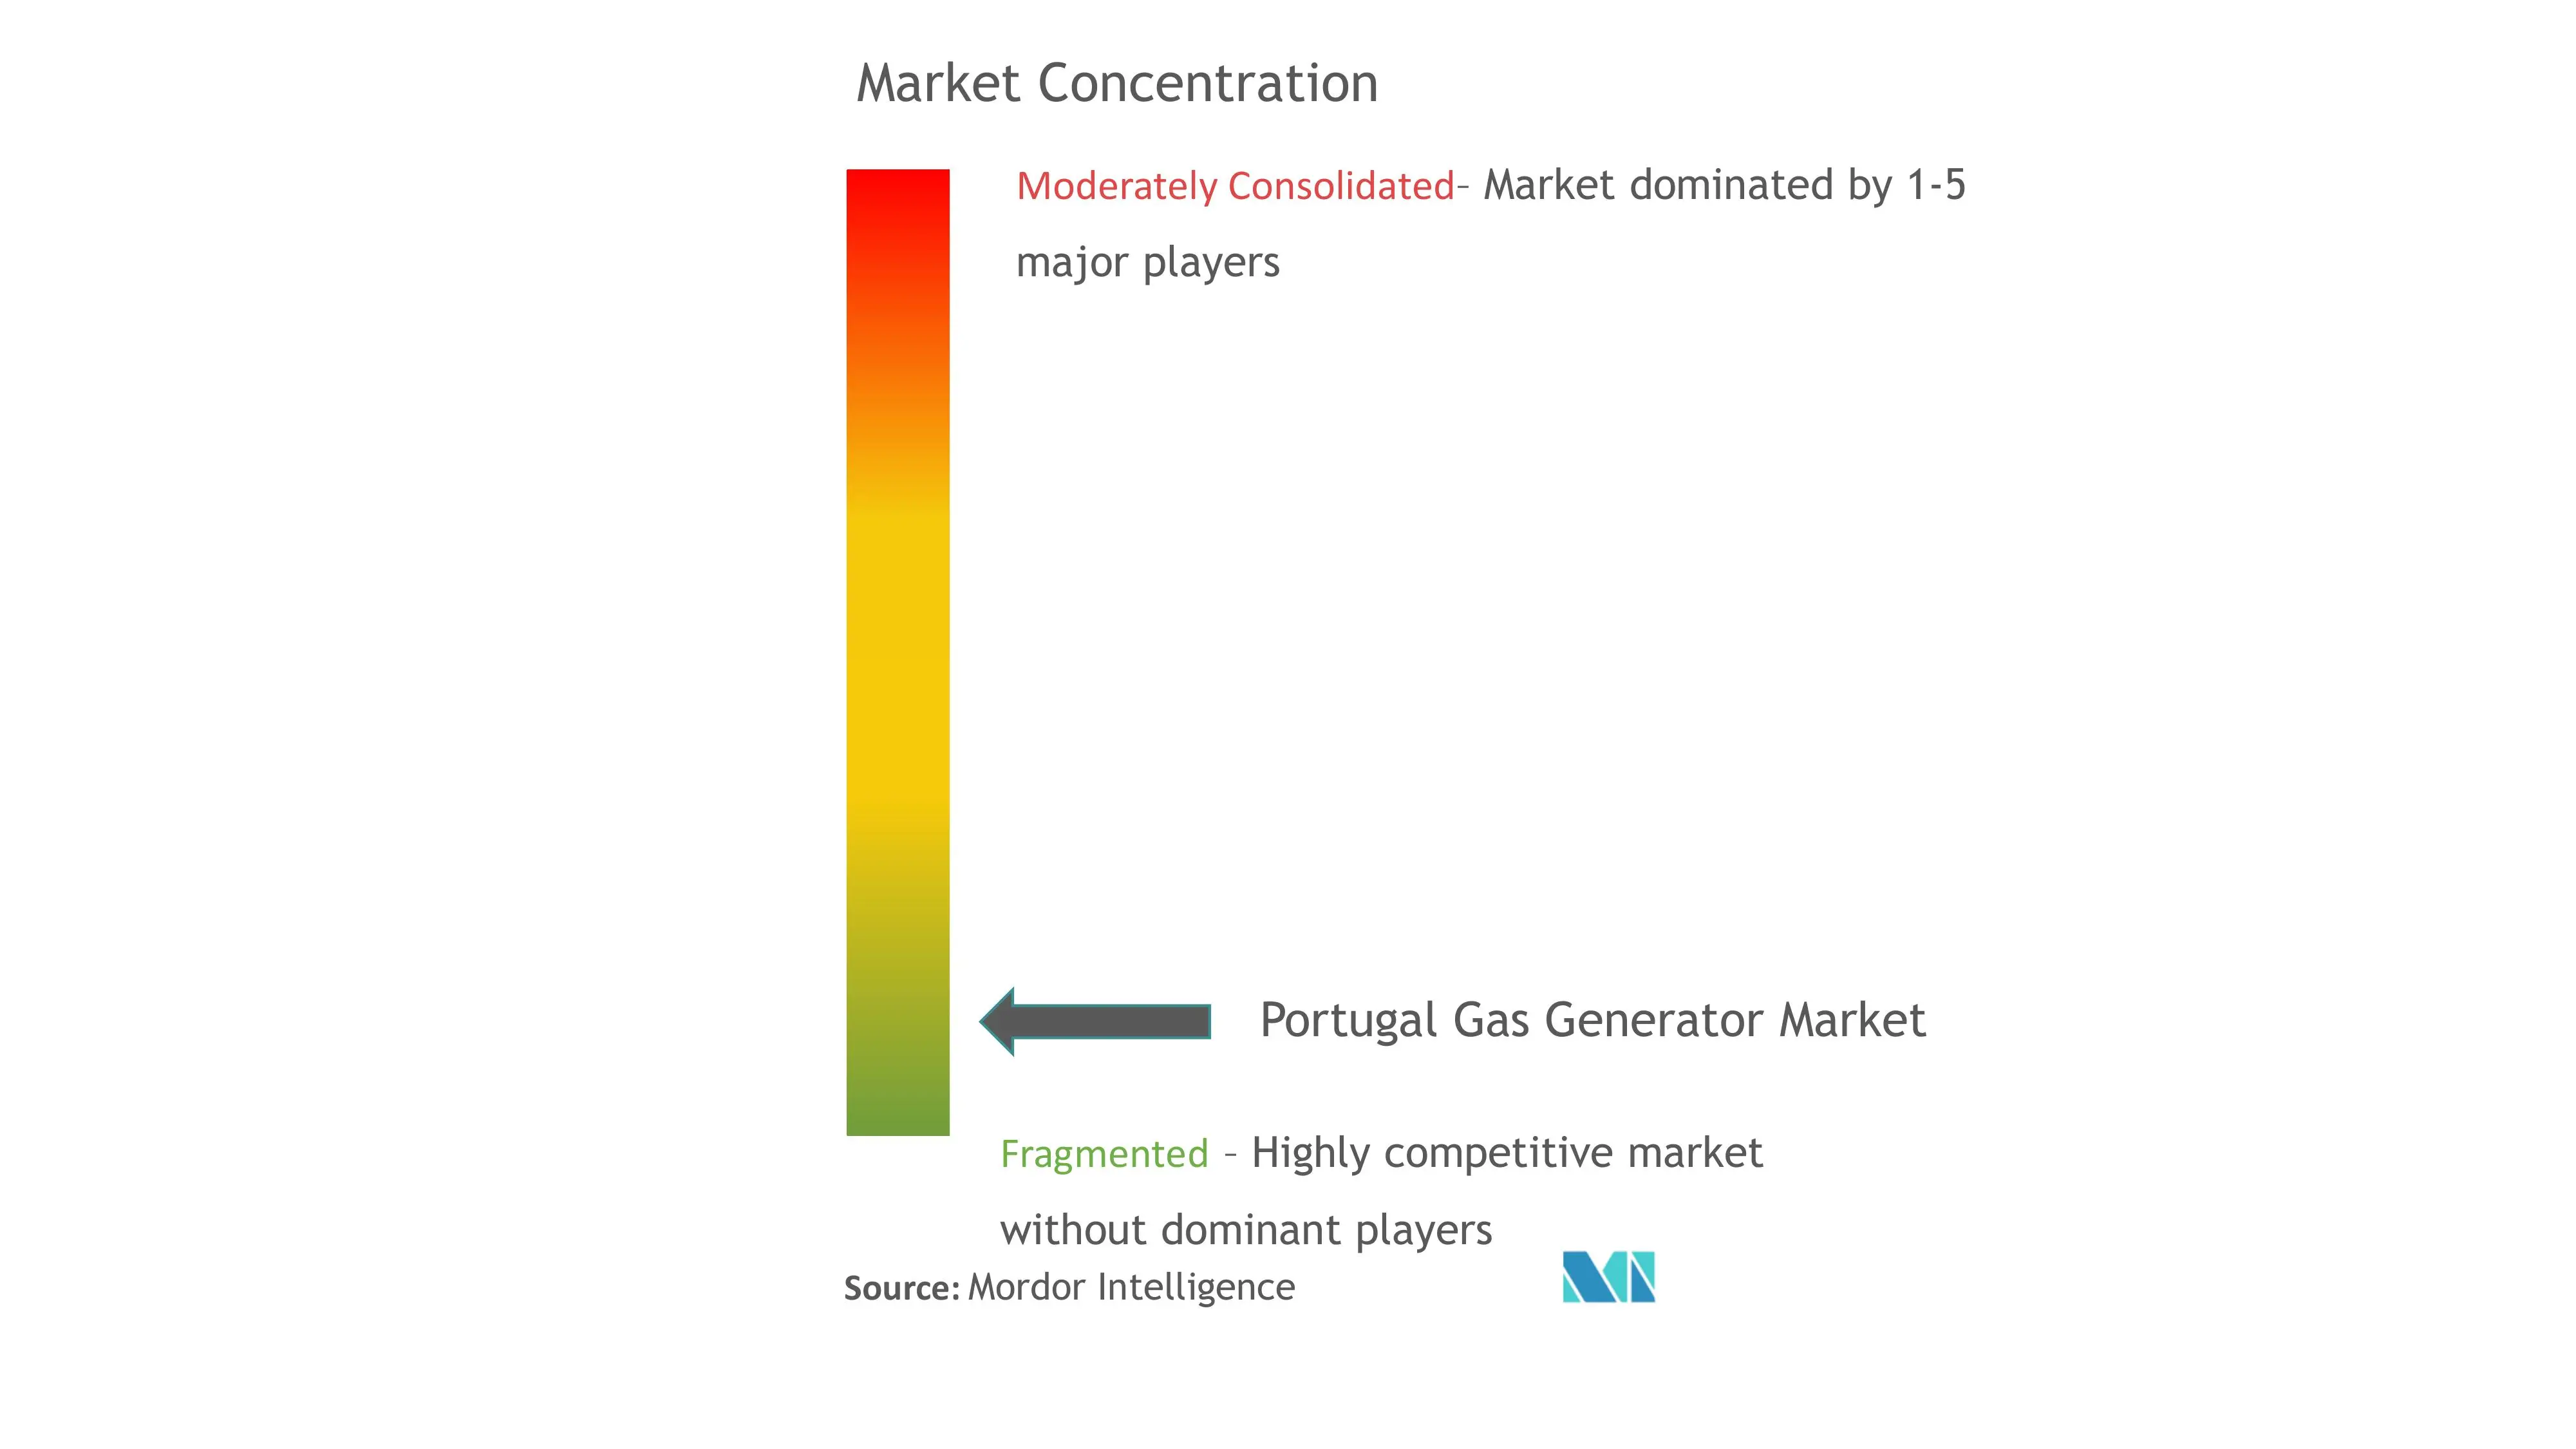 Portugal Gas Generator Market Concentration